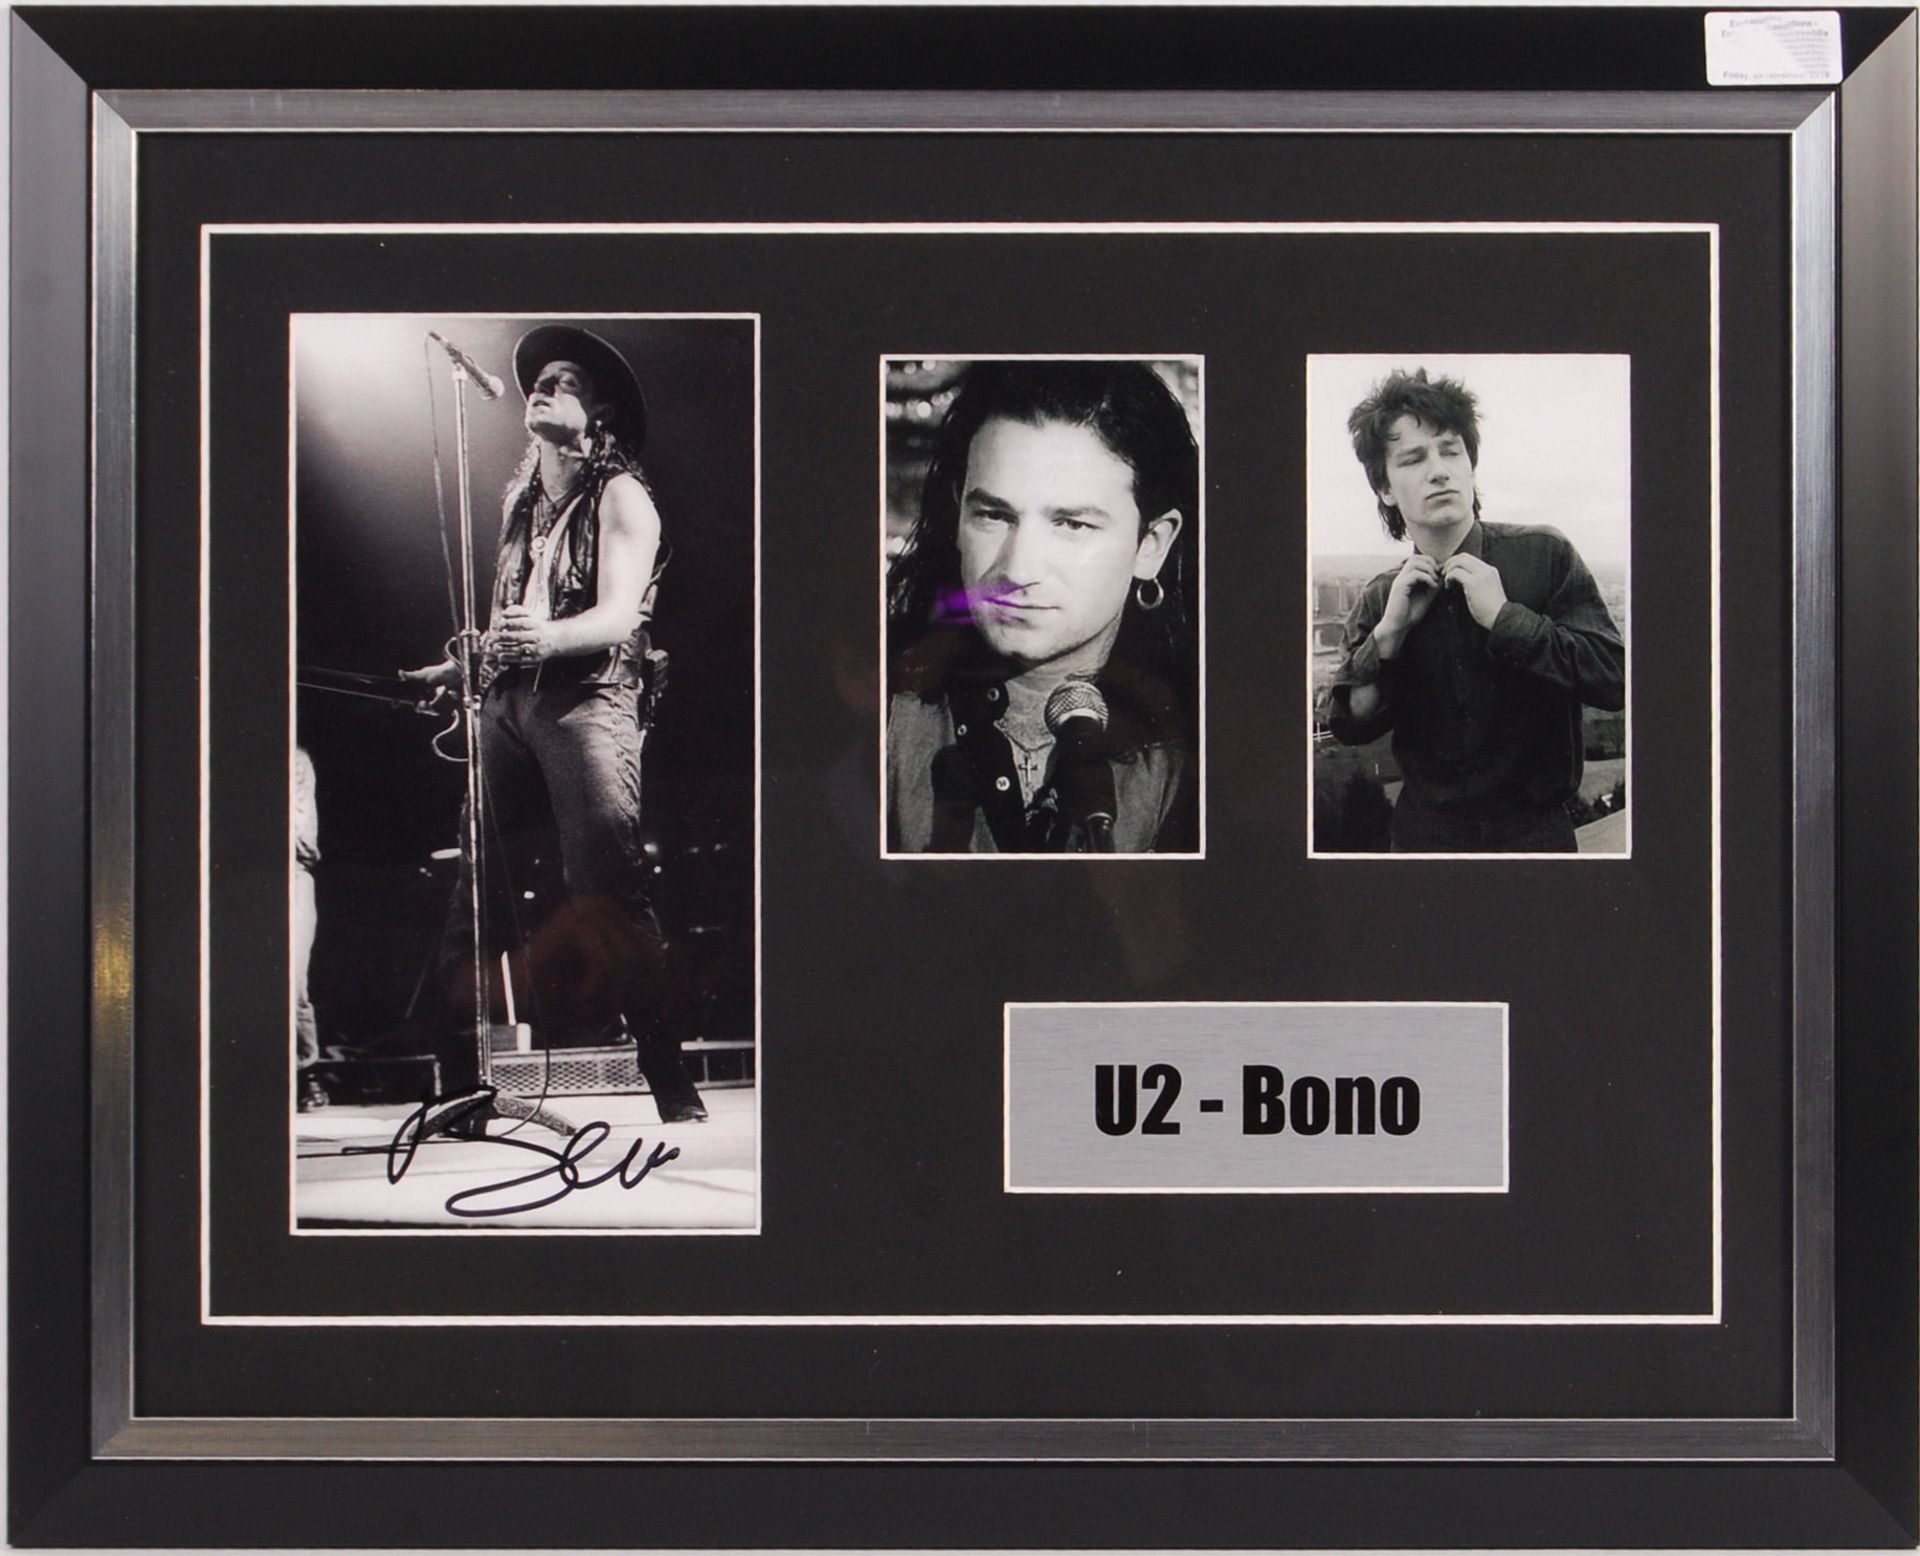 U2 - BONO - SUPERB AUTOGRAPH MONTAGE DISPLAY